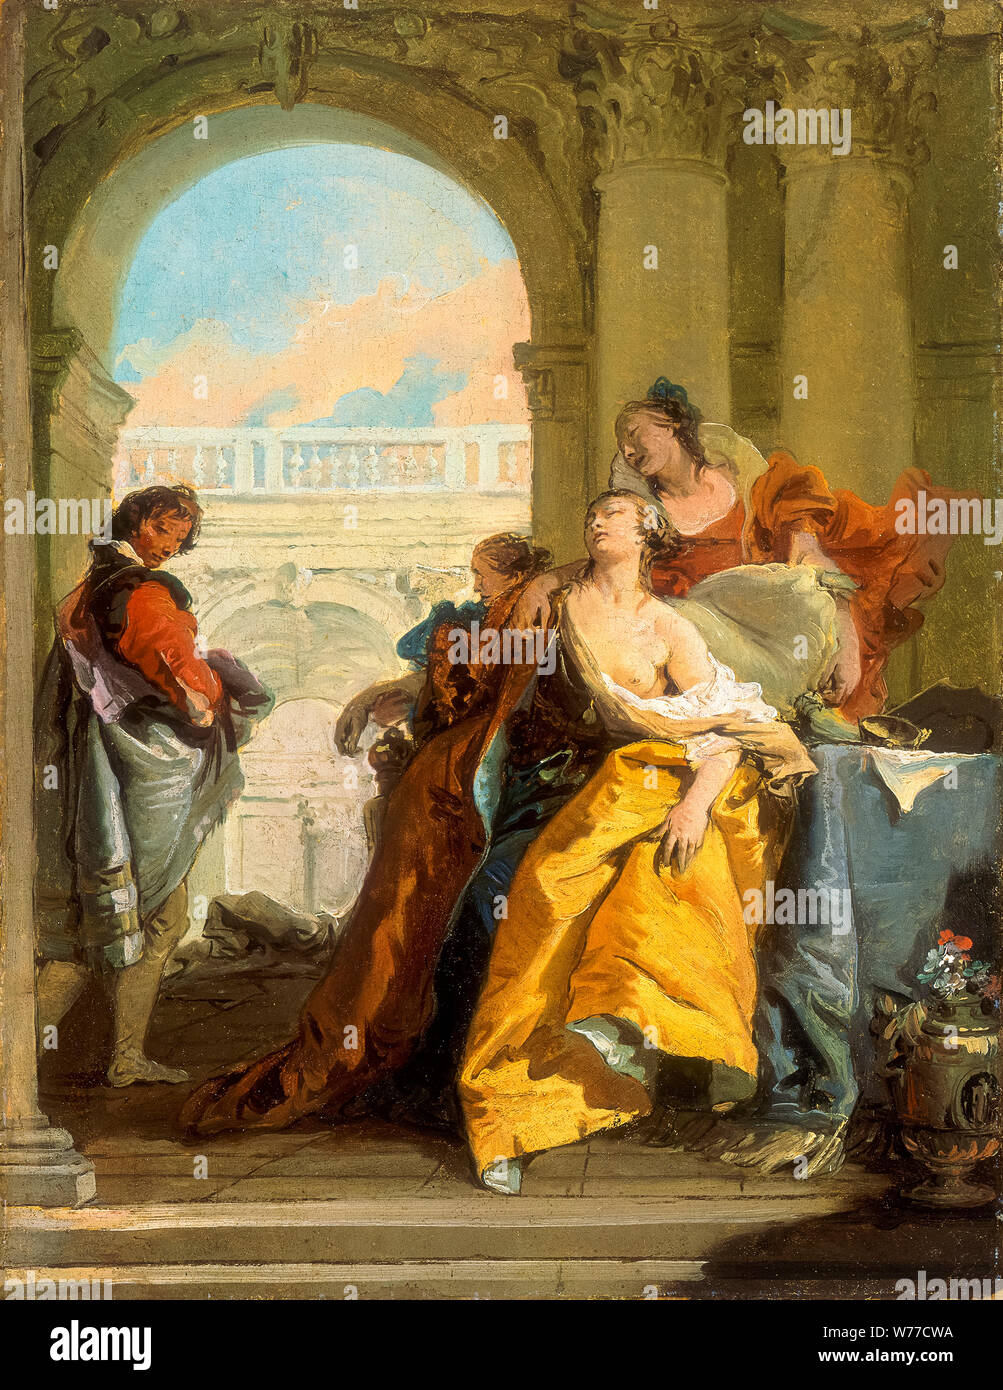 Giovanni Battista Tiepolo, la mort de Sophonisba, peinture, 1755-1760 Banque D'Images